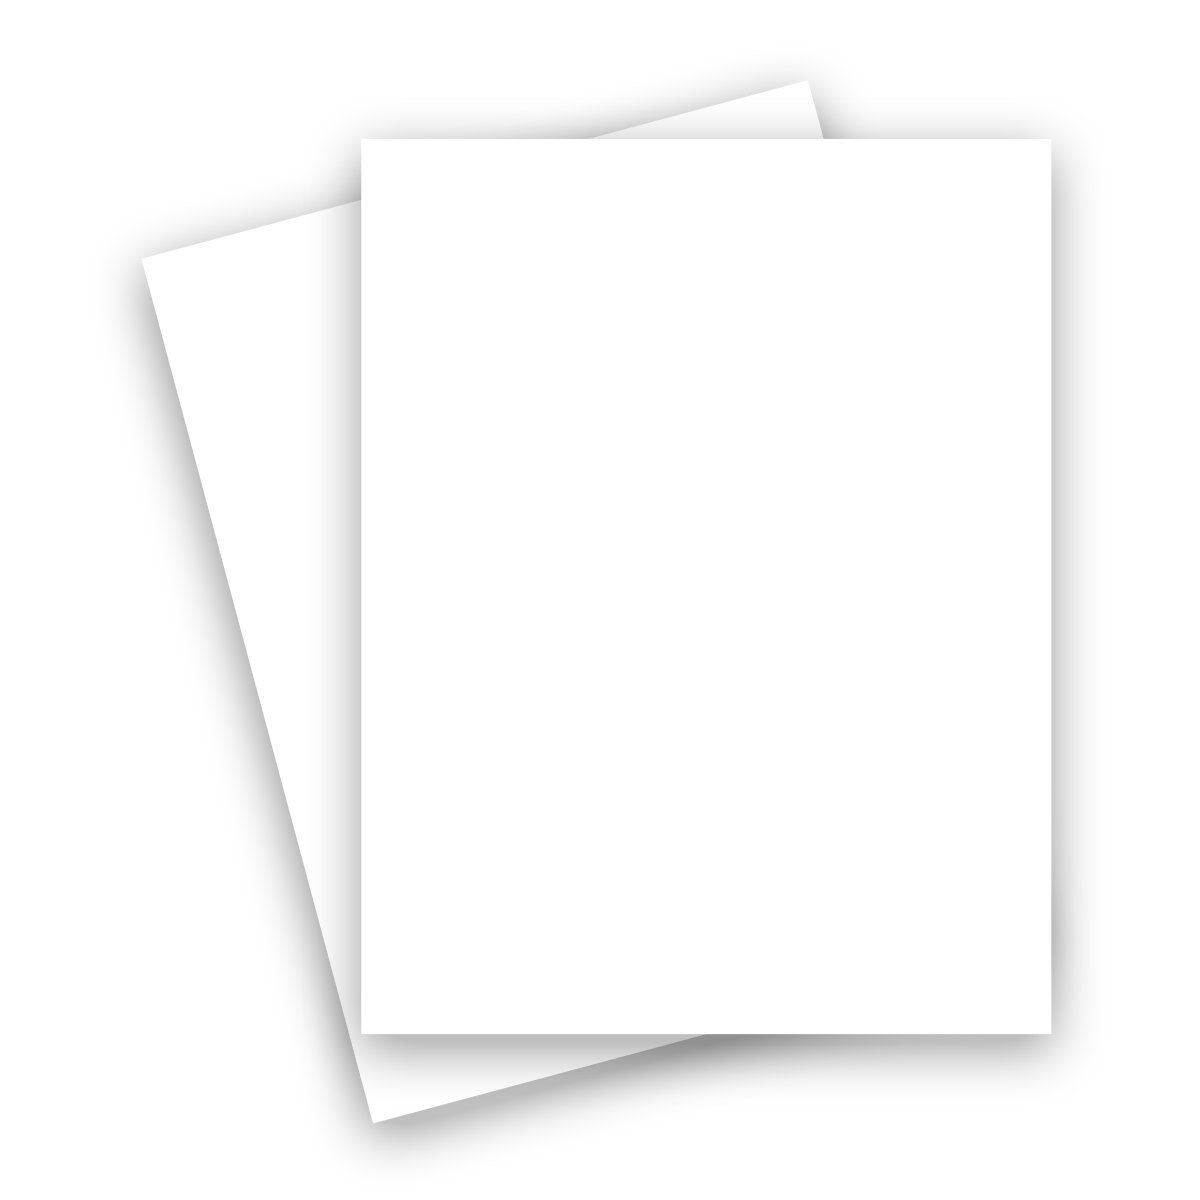 SPECKLETONE True White - 8.5X11 Card Stock Paper - 100lb Cover